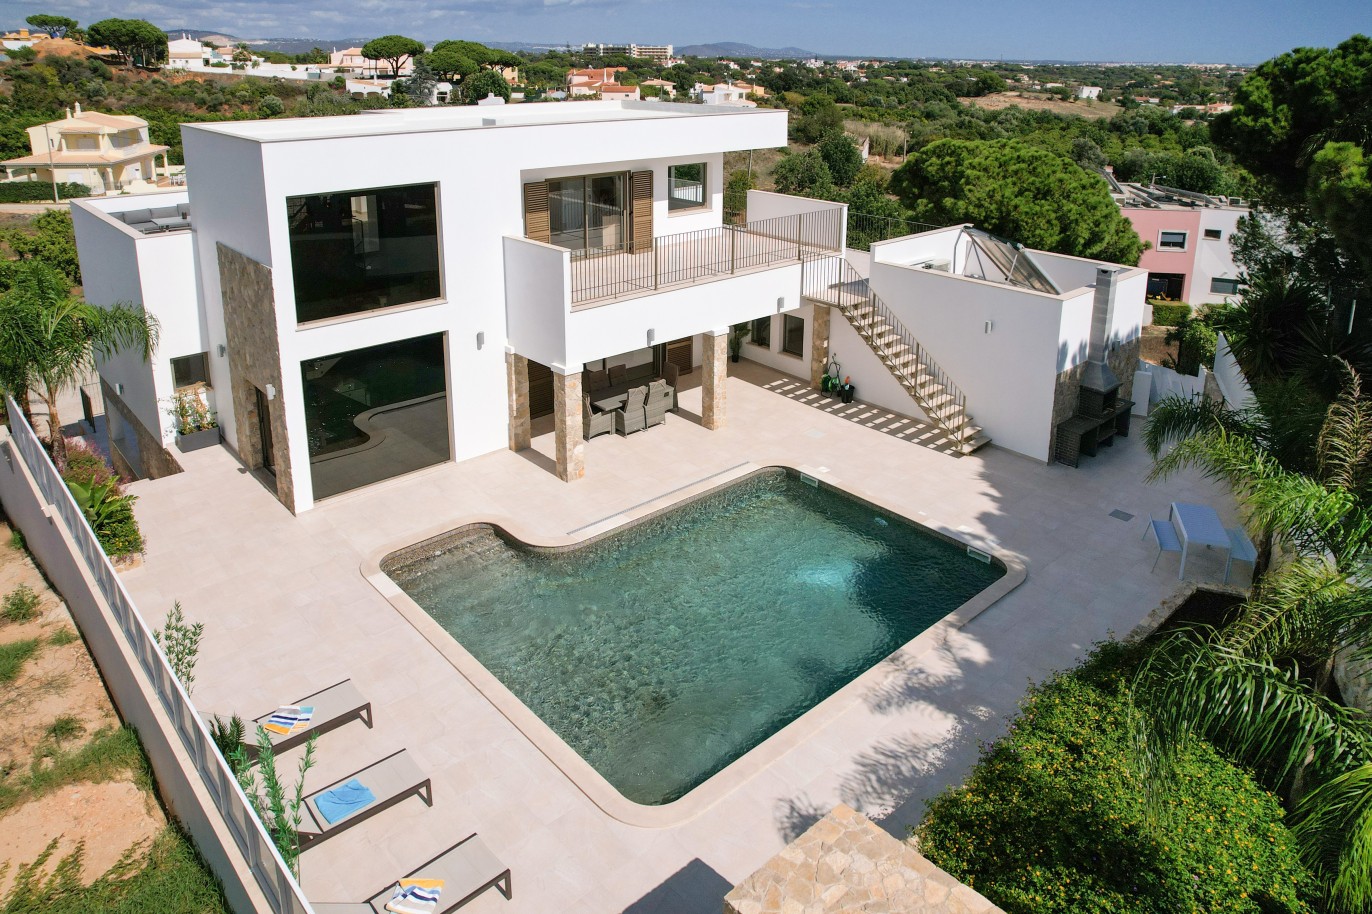 5 bedroom villa with pool, new build, for sale in Albufeira, Algarve_238317